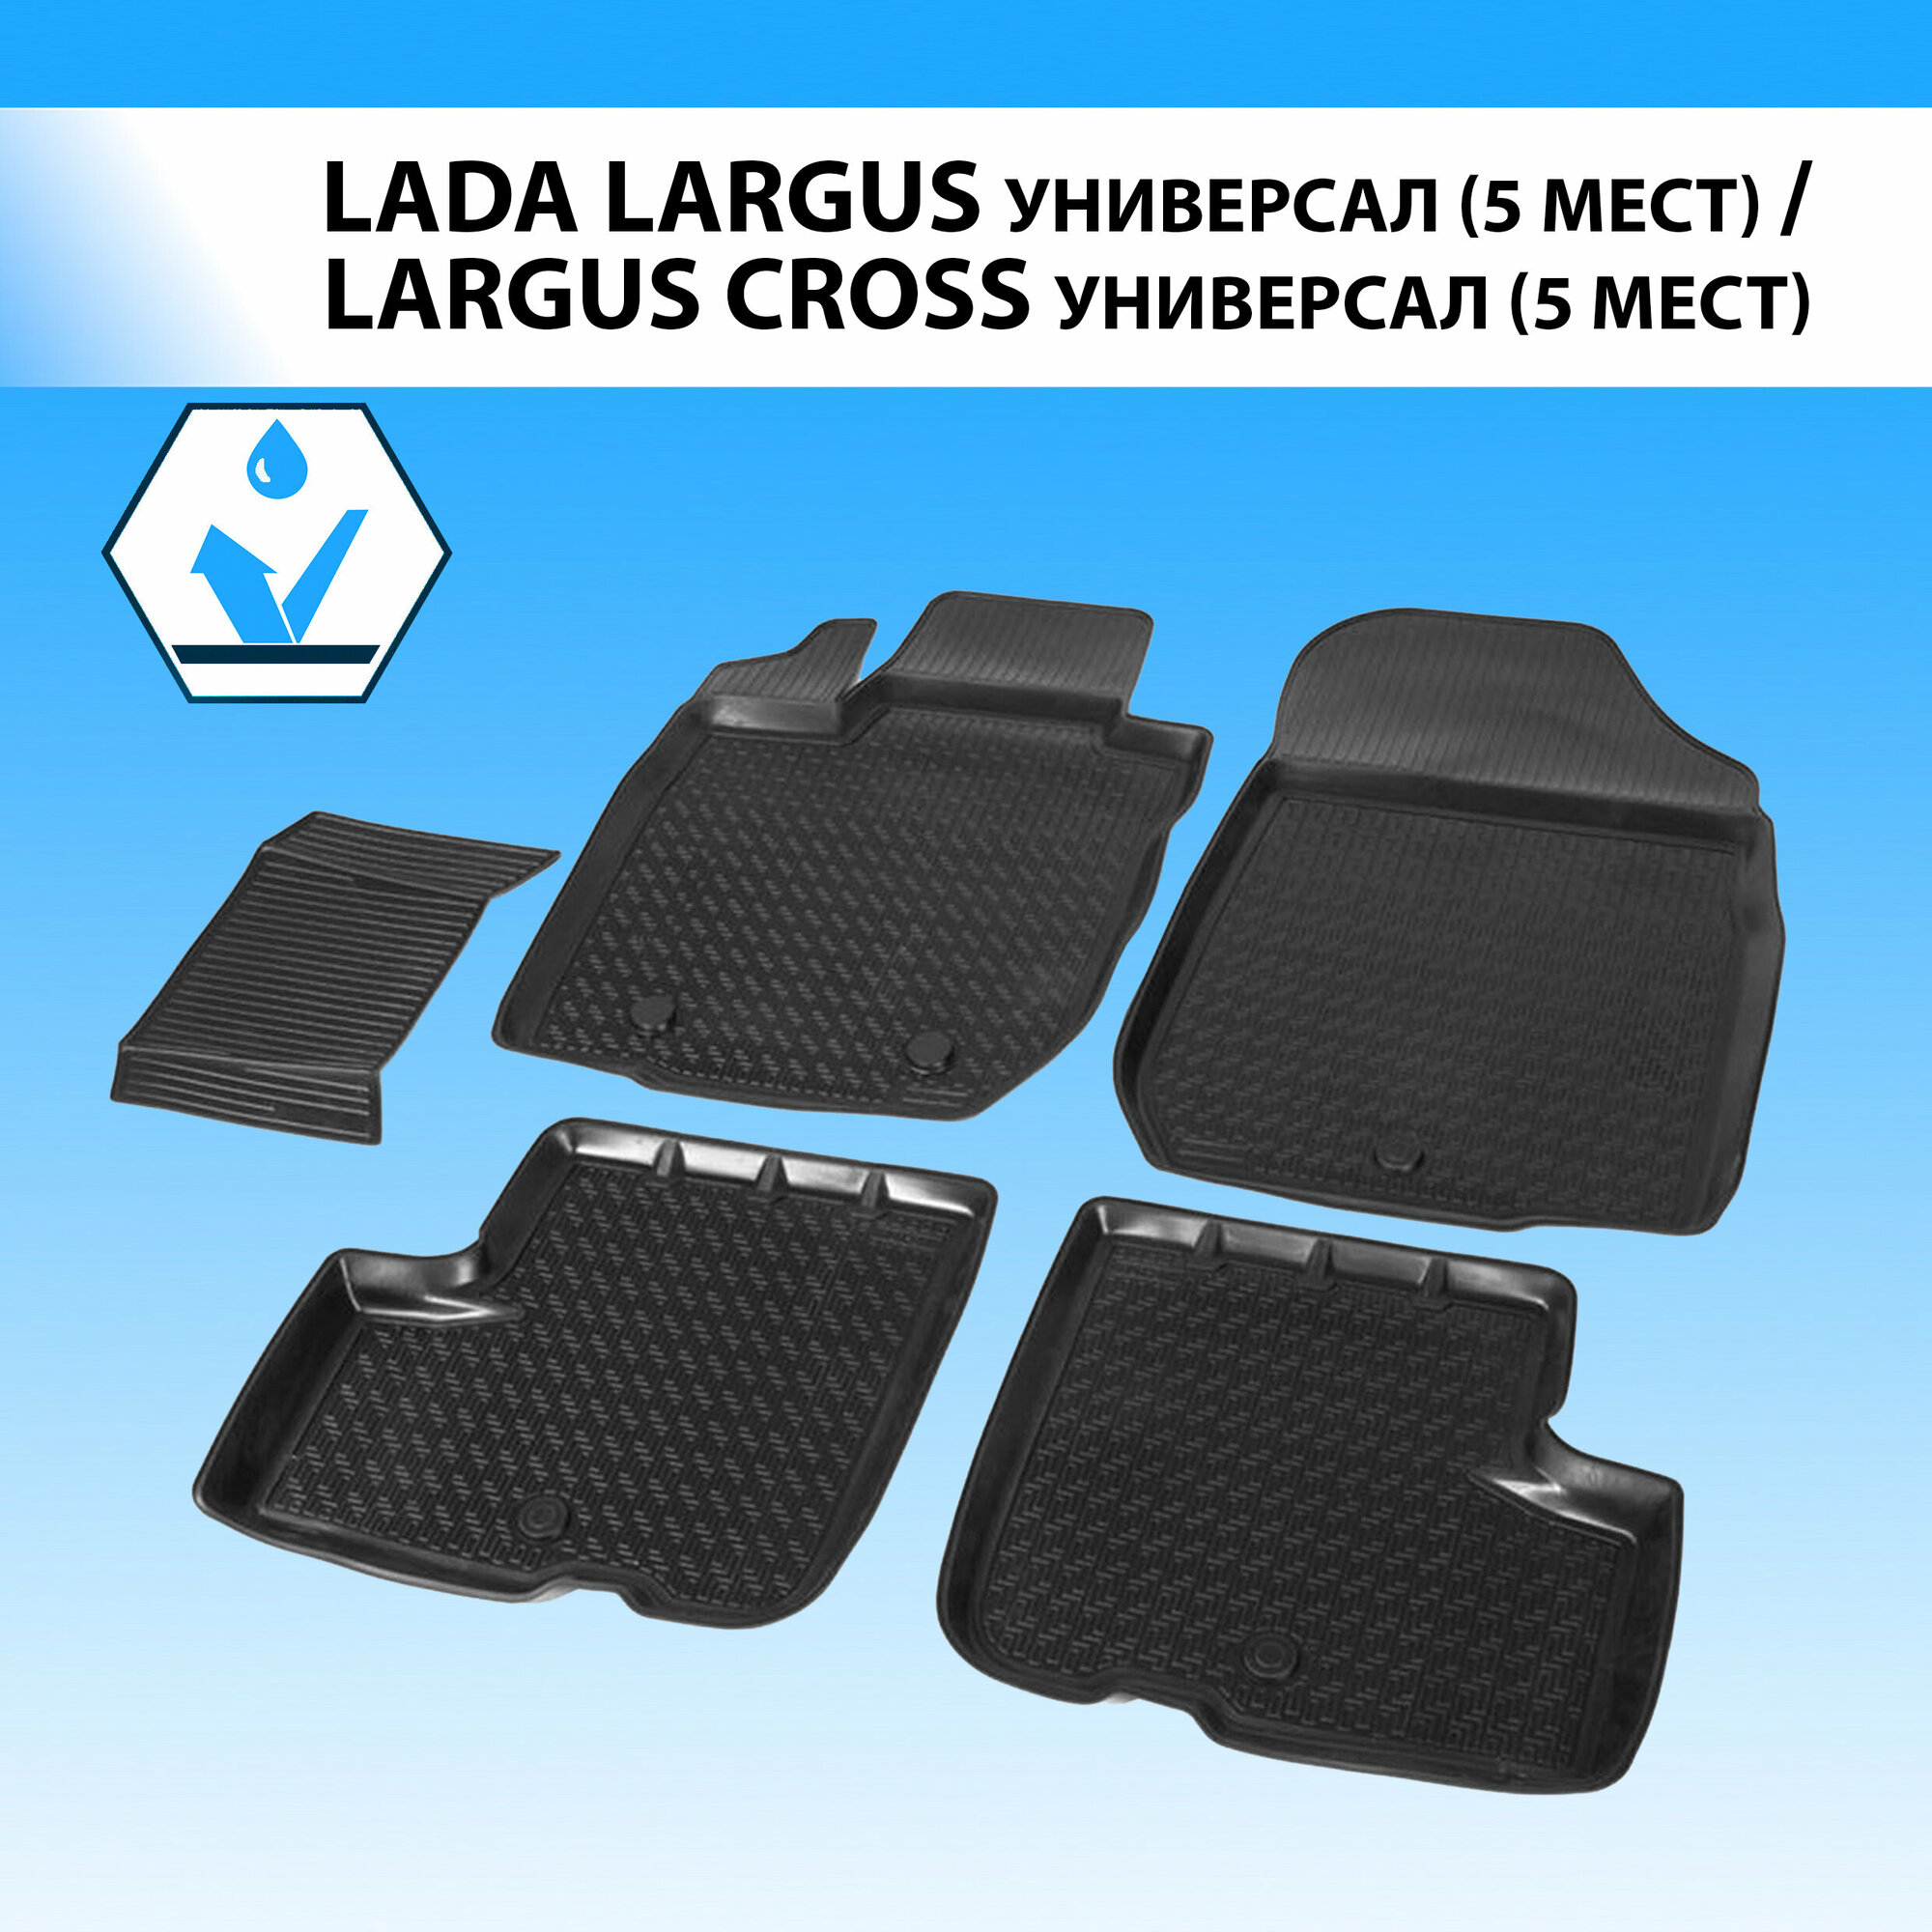   Lada () Largus, Largus Cross   Rival Rival 16003001 Rival . 16003001